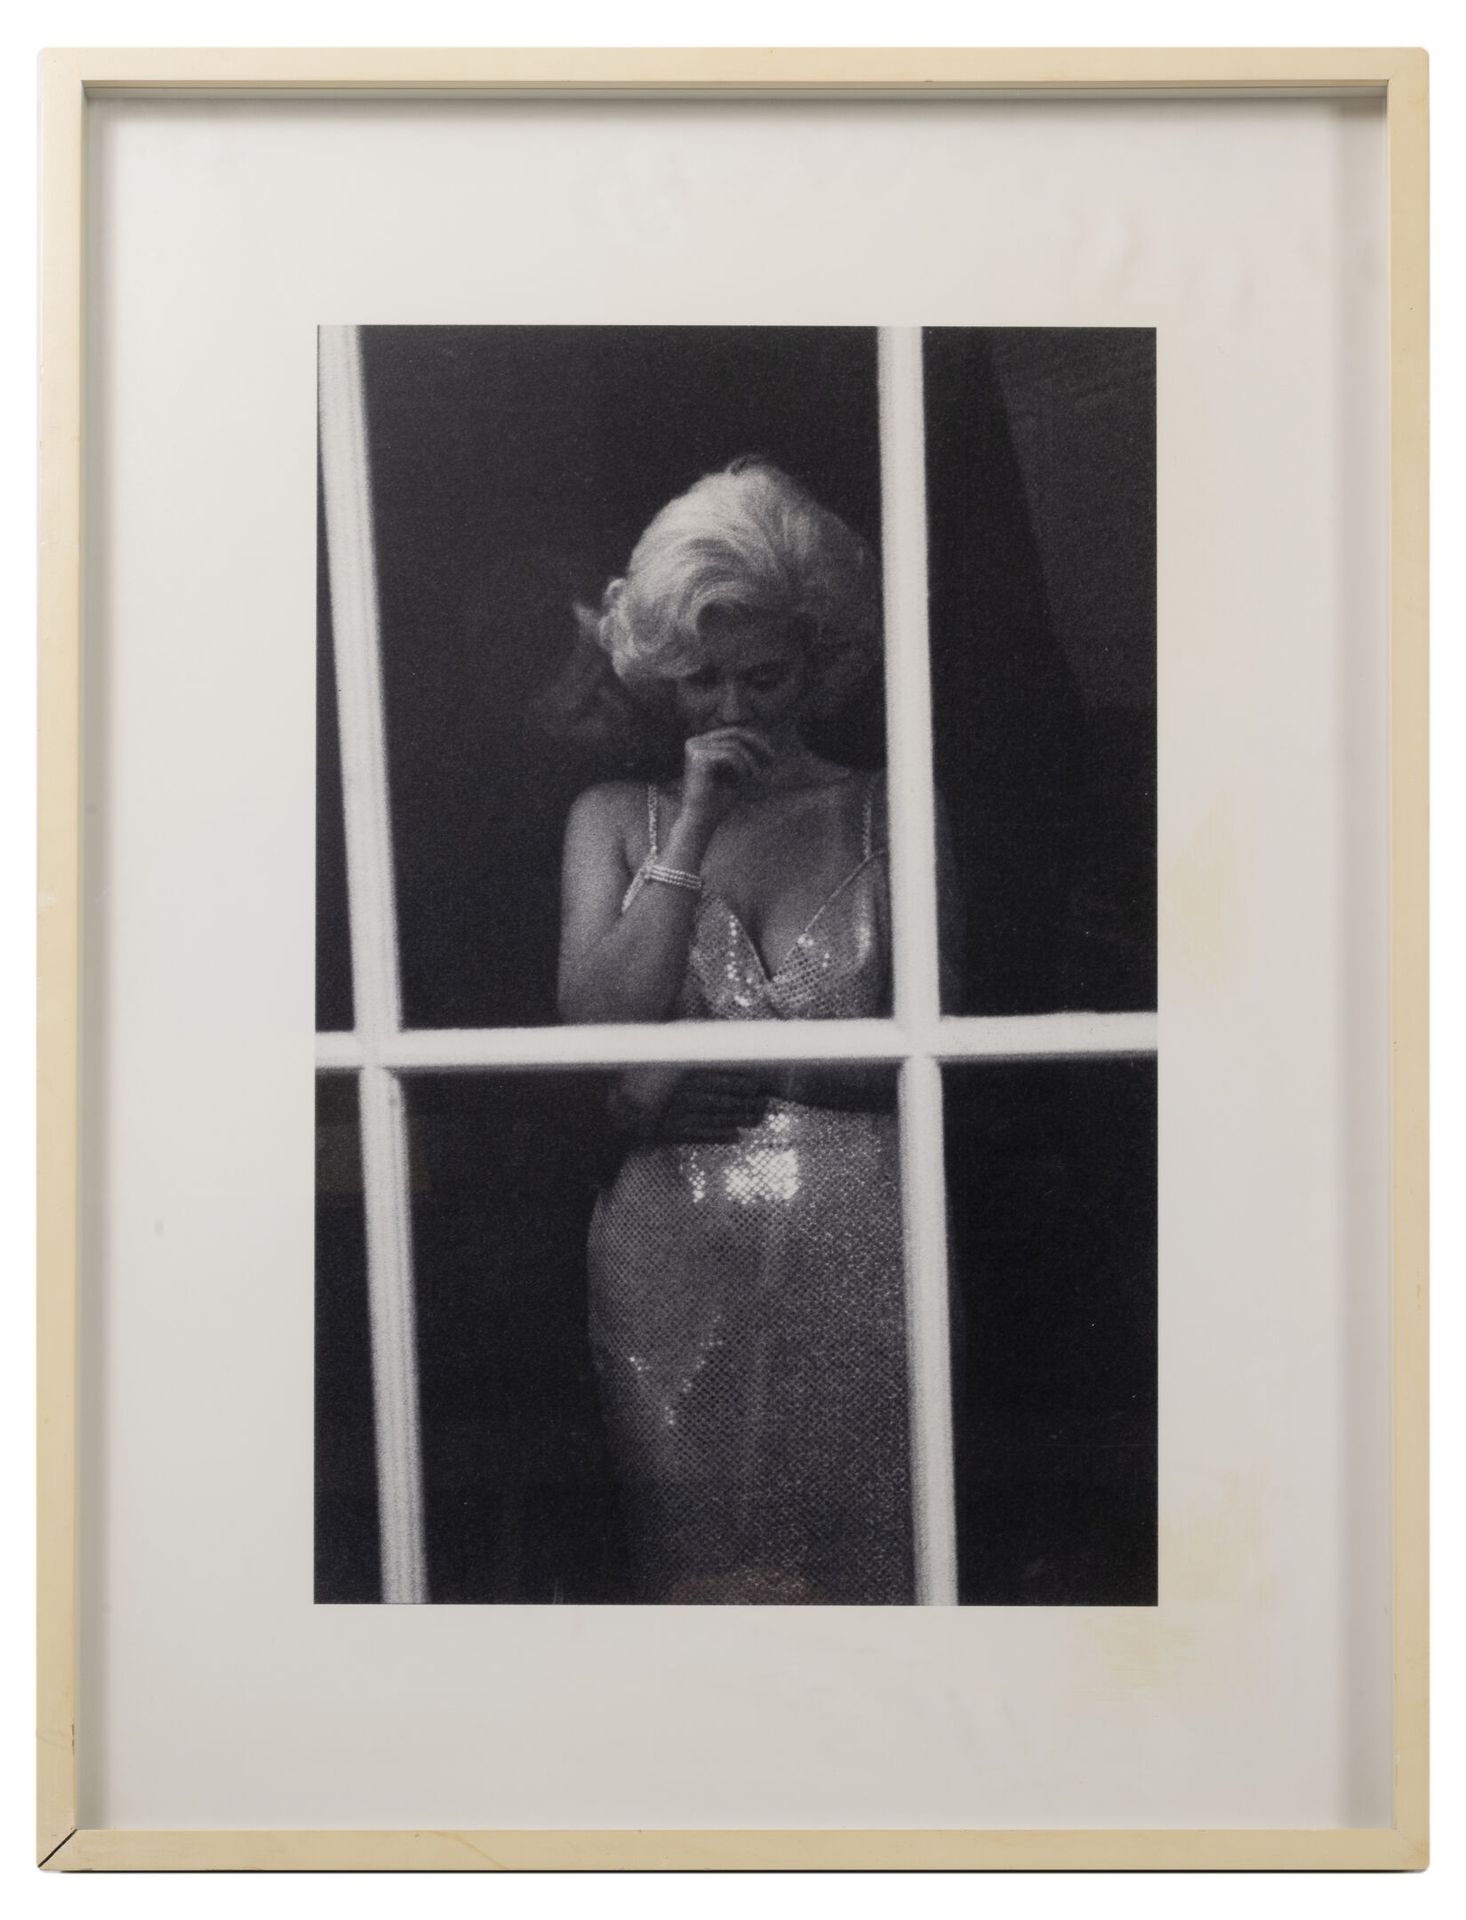 Alison JACKSON (1970) Marilyn Looking through the Window, 2005.

纸上摄影印刷品。

背面有签名&hellip;